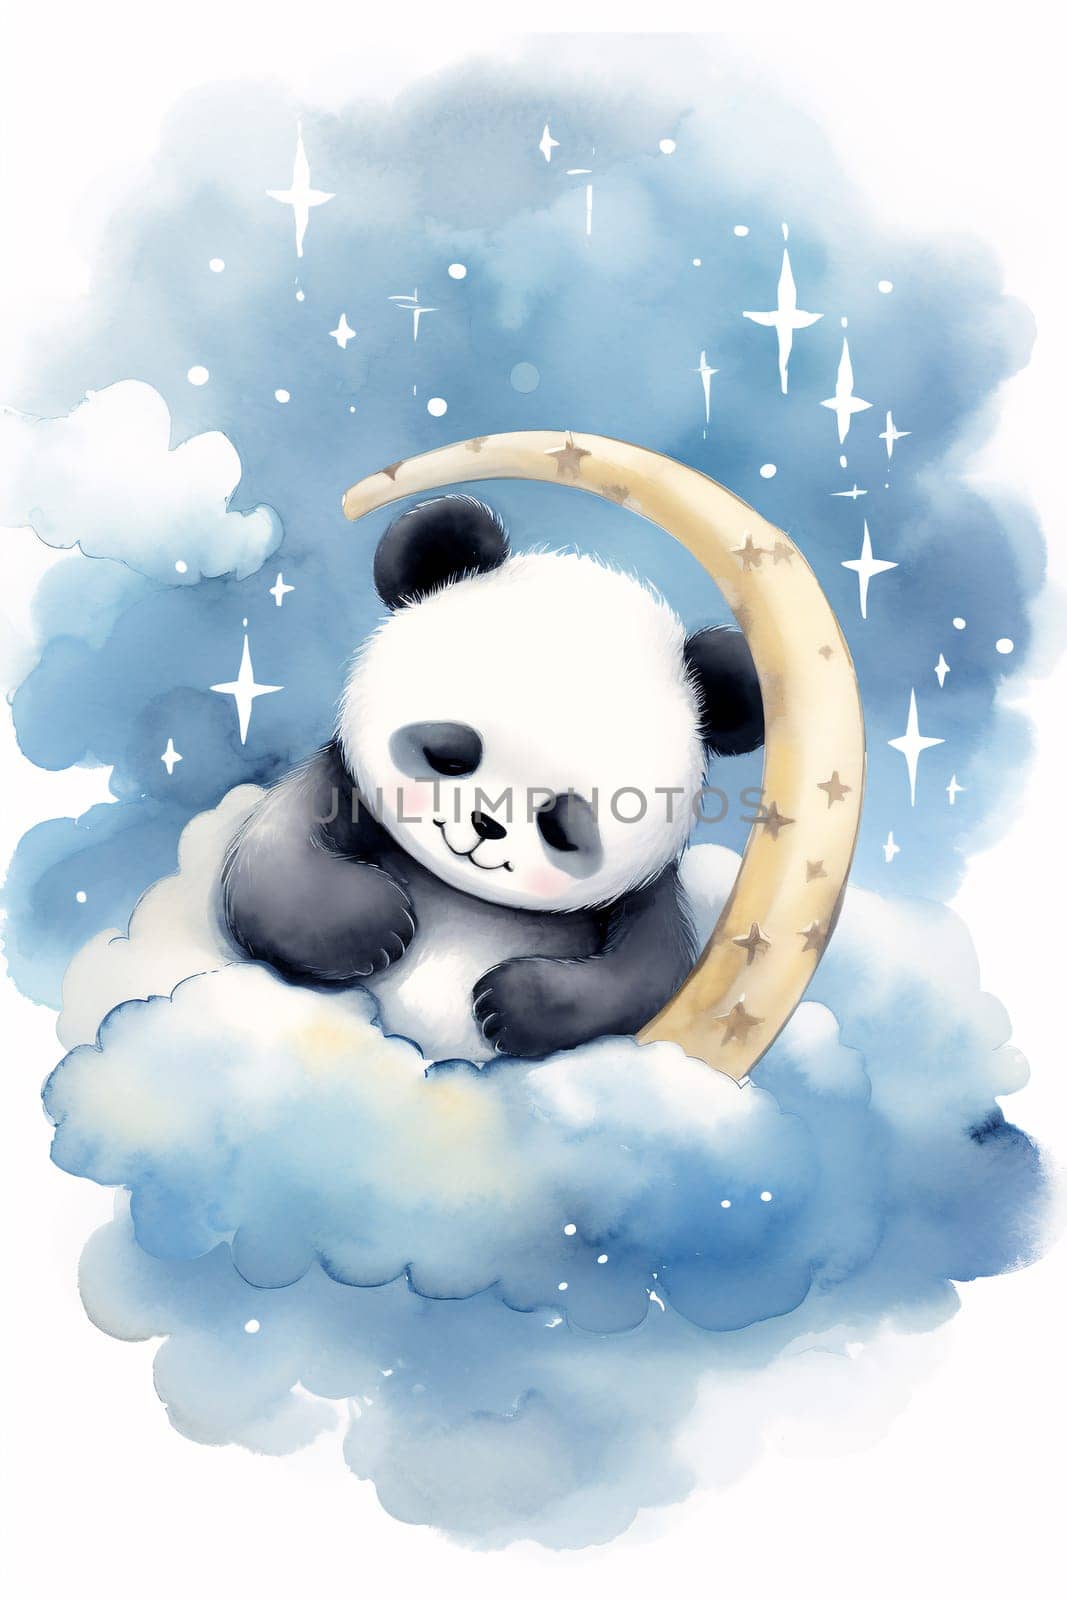 A panda on a cloud by chrisroll